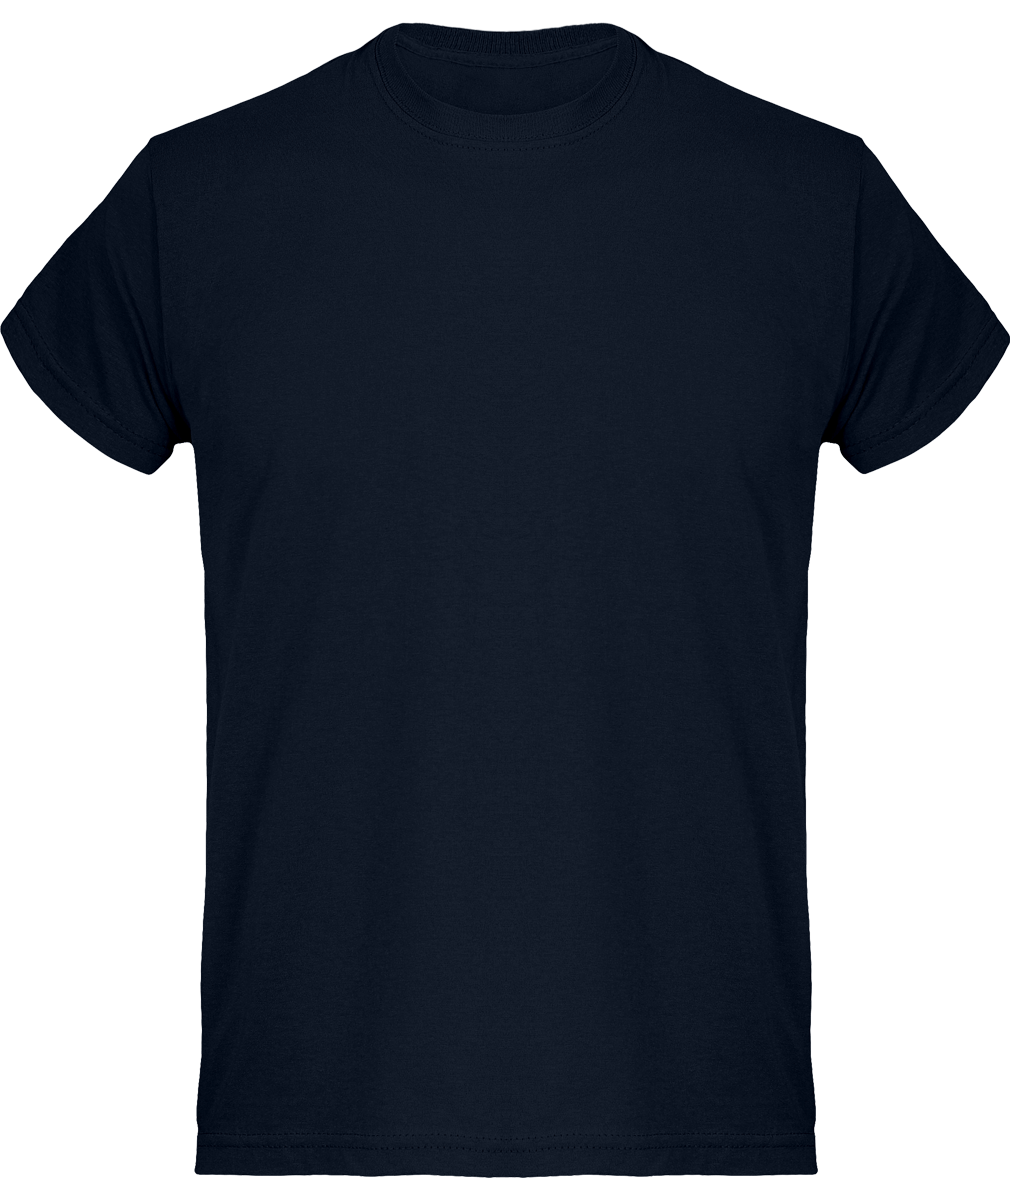 Camiseta Básica De Algodón Para Hombres, Ideal Para Personalización Deep Navy